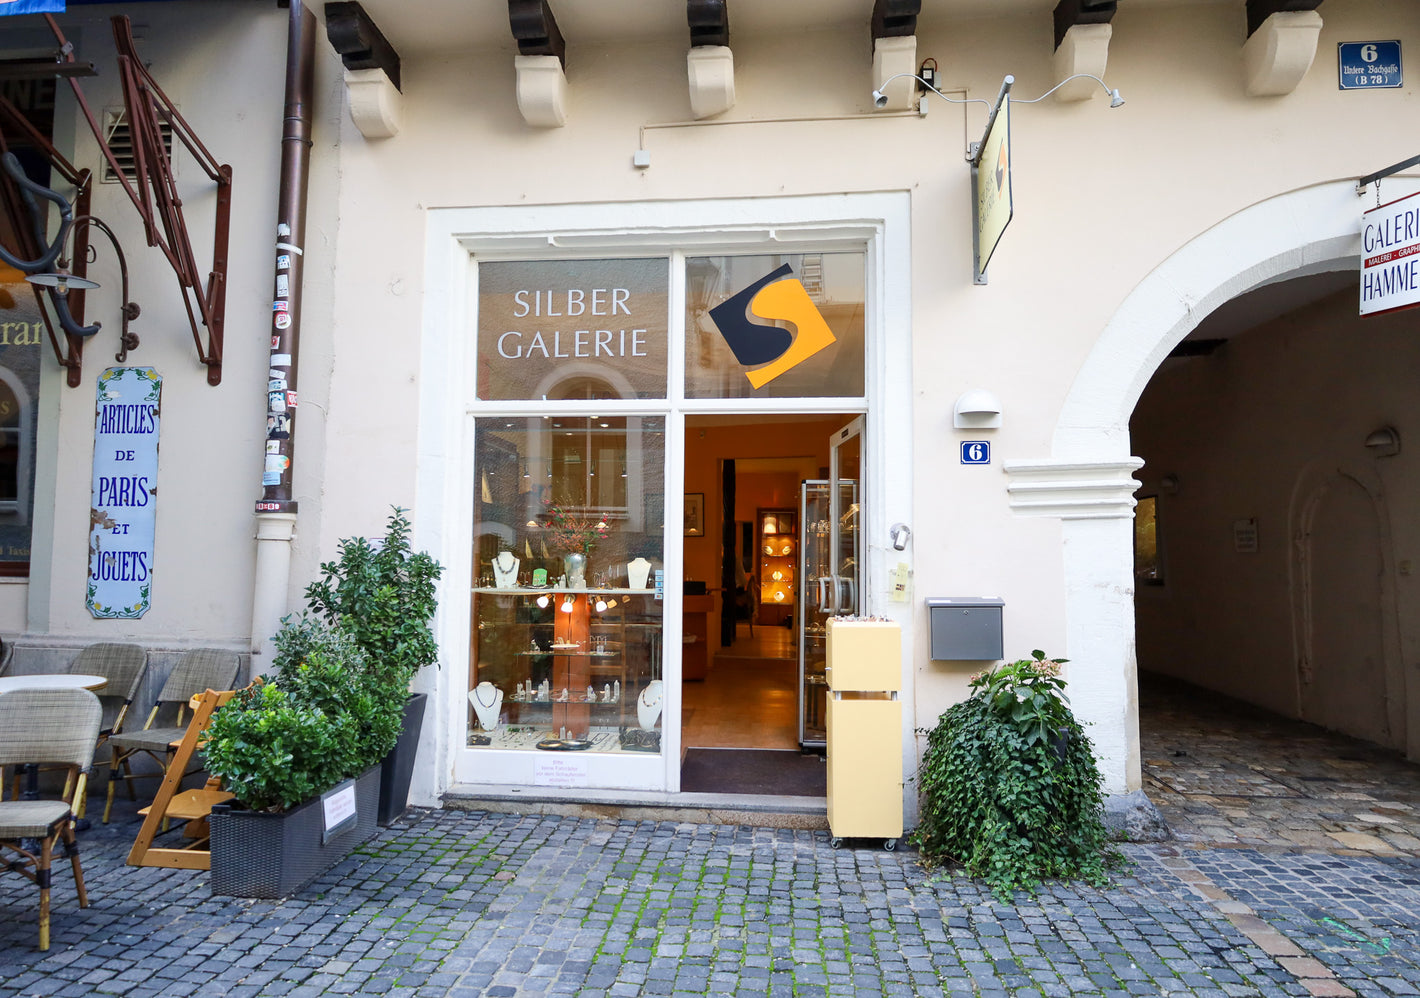 Silber Galerie S Laden in Regensburg